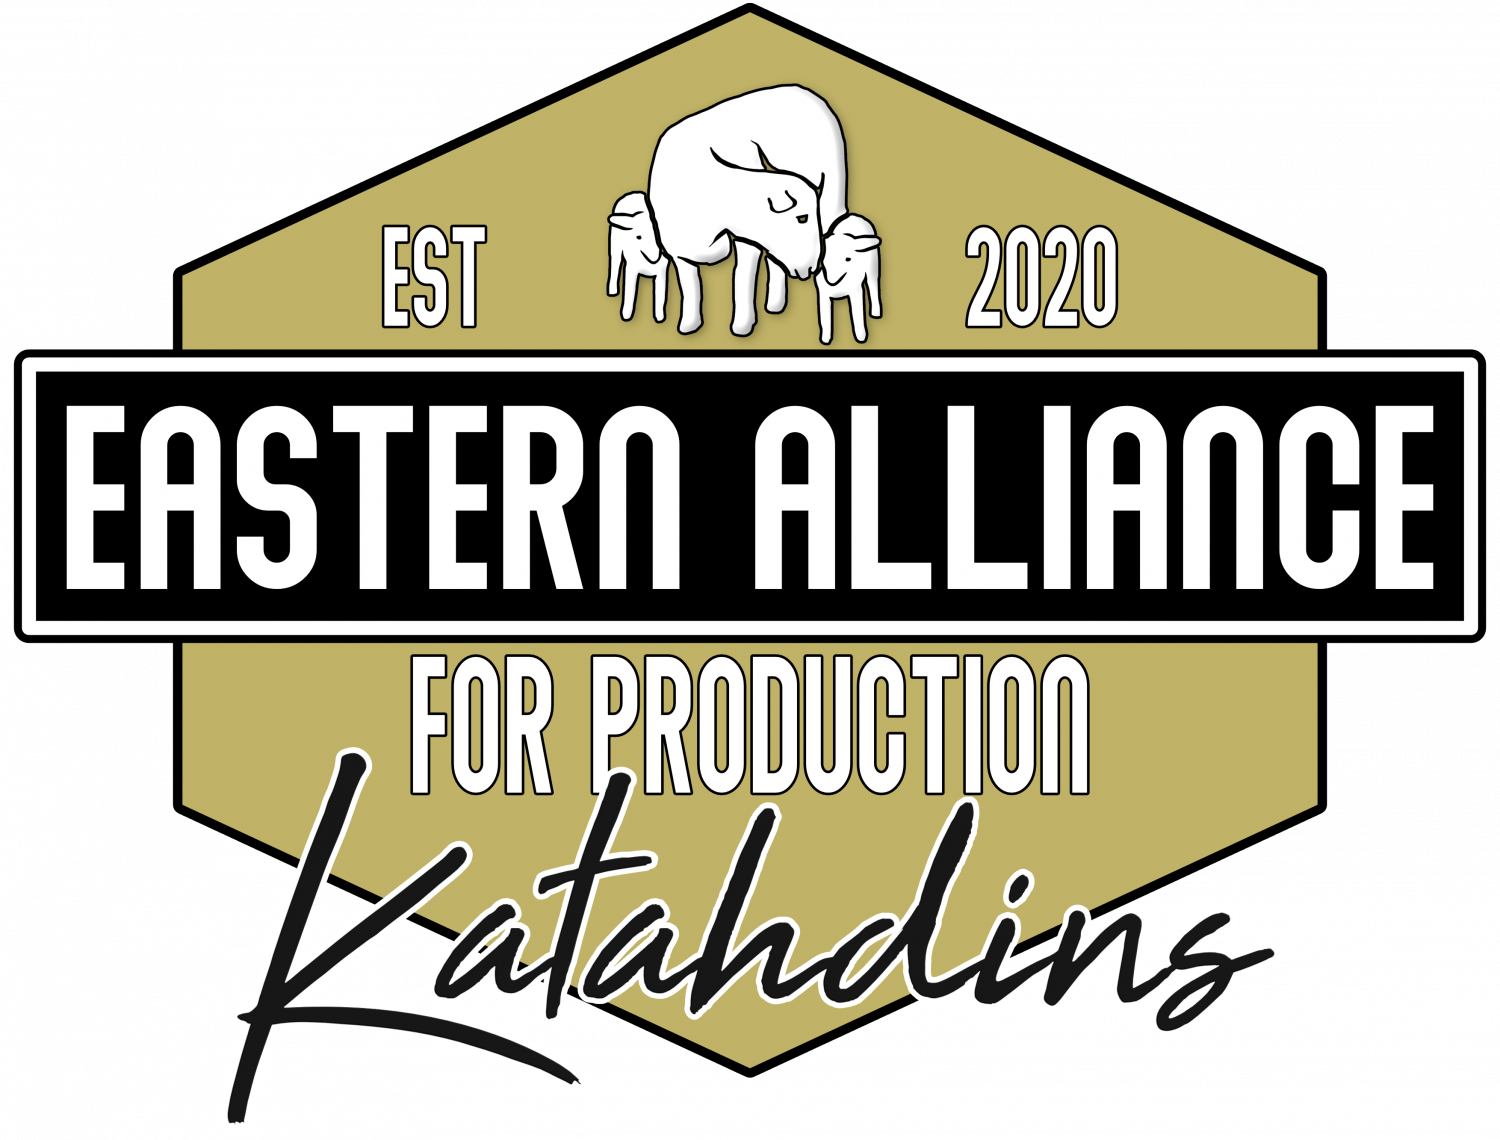 Eastern Alliance for Production Katahdins